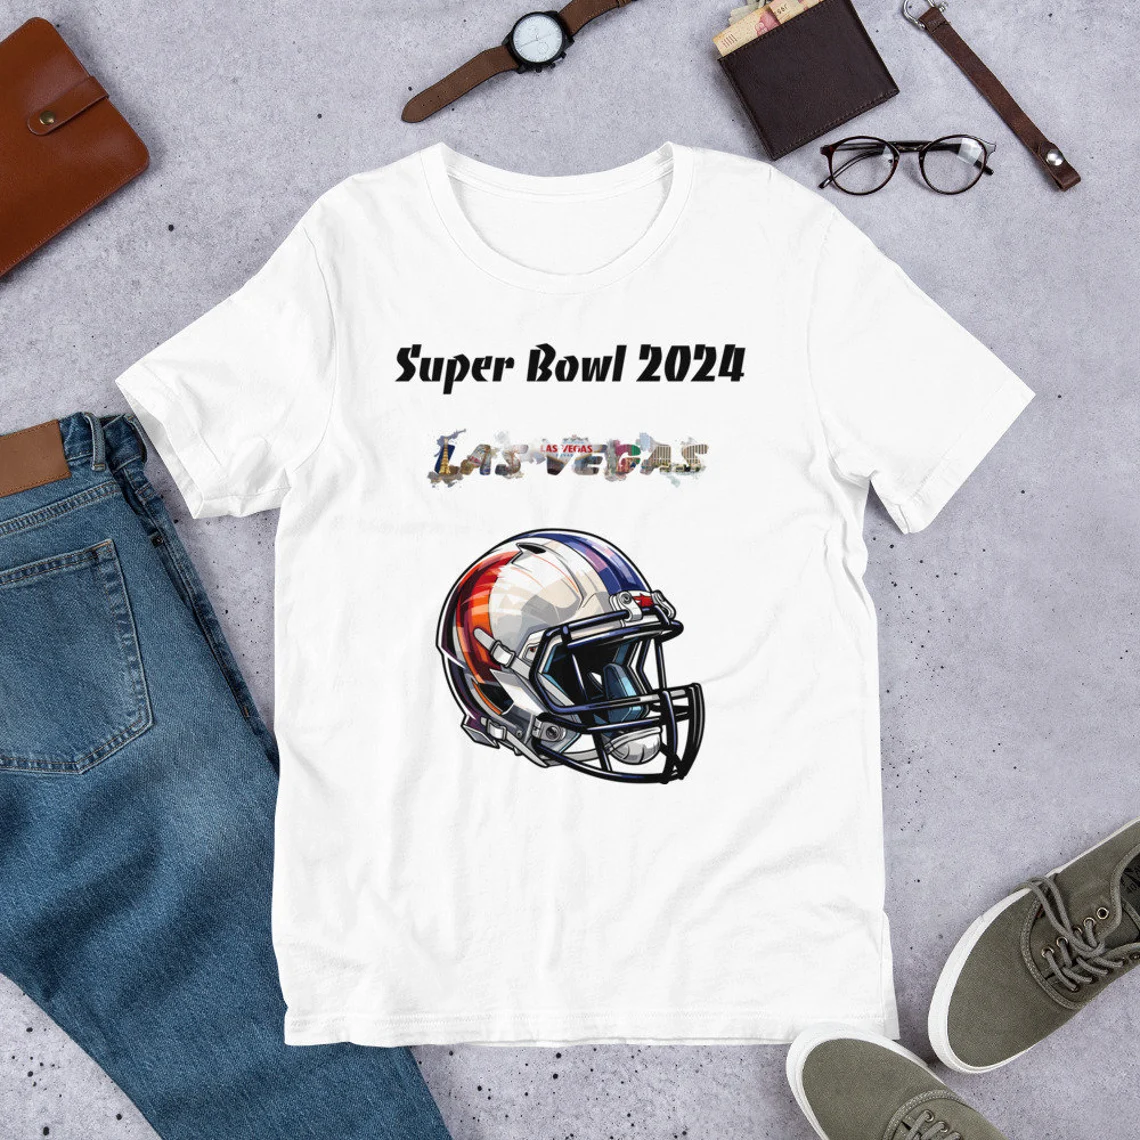 Super Bowl 2024 Las Vegas T Shirt